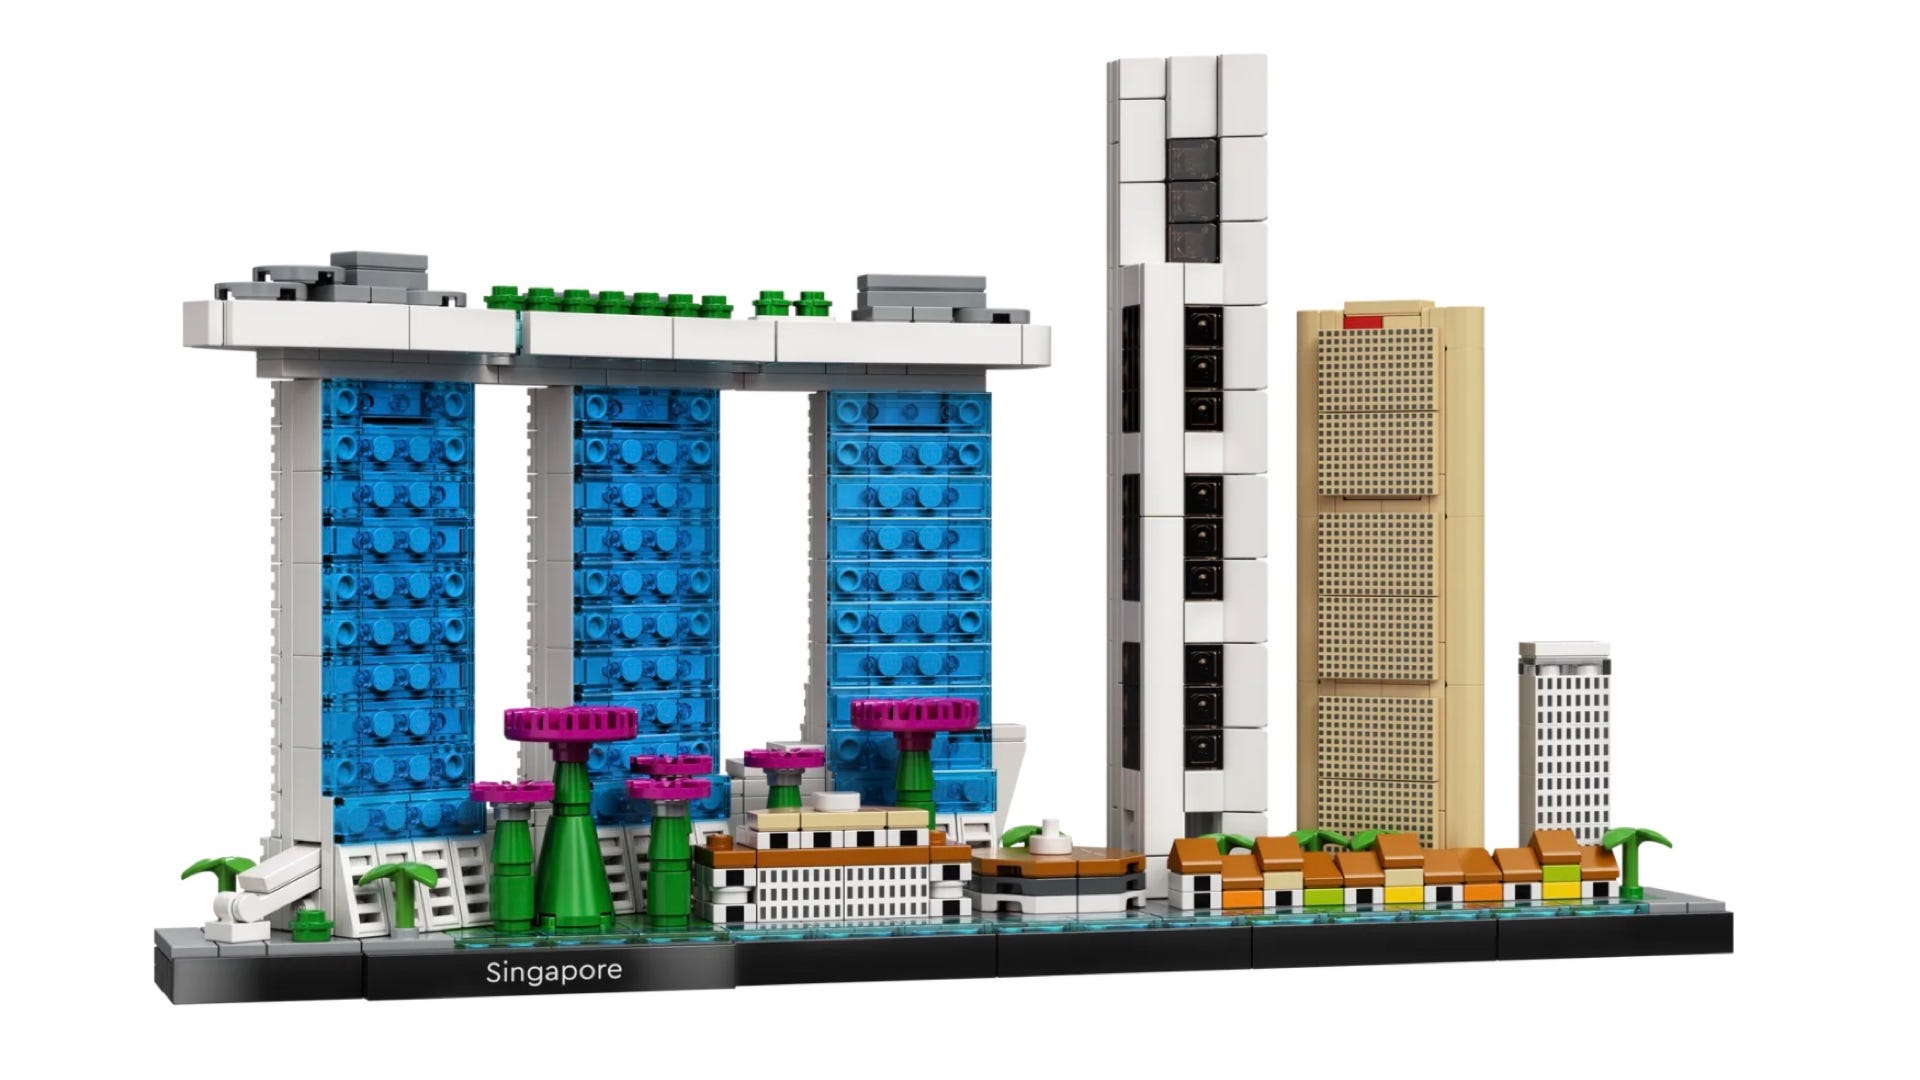 Kumpulan arsitektur LEGO terbaru membawa Anda ke landmark Singapura